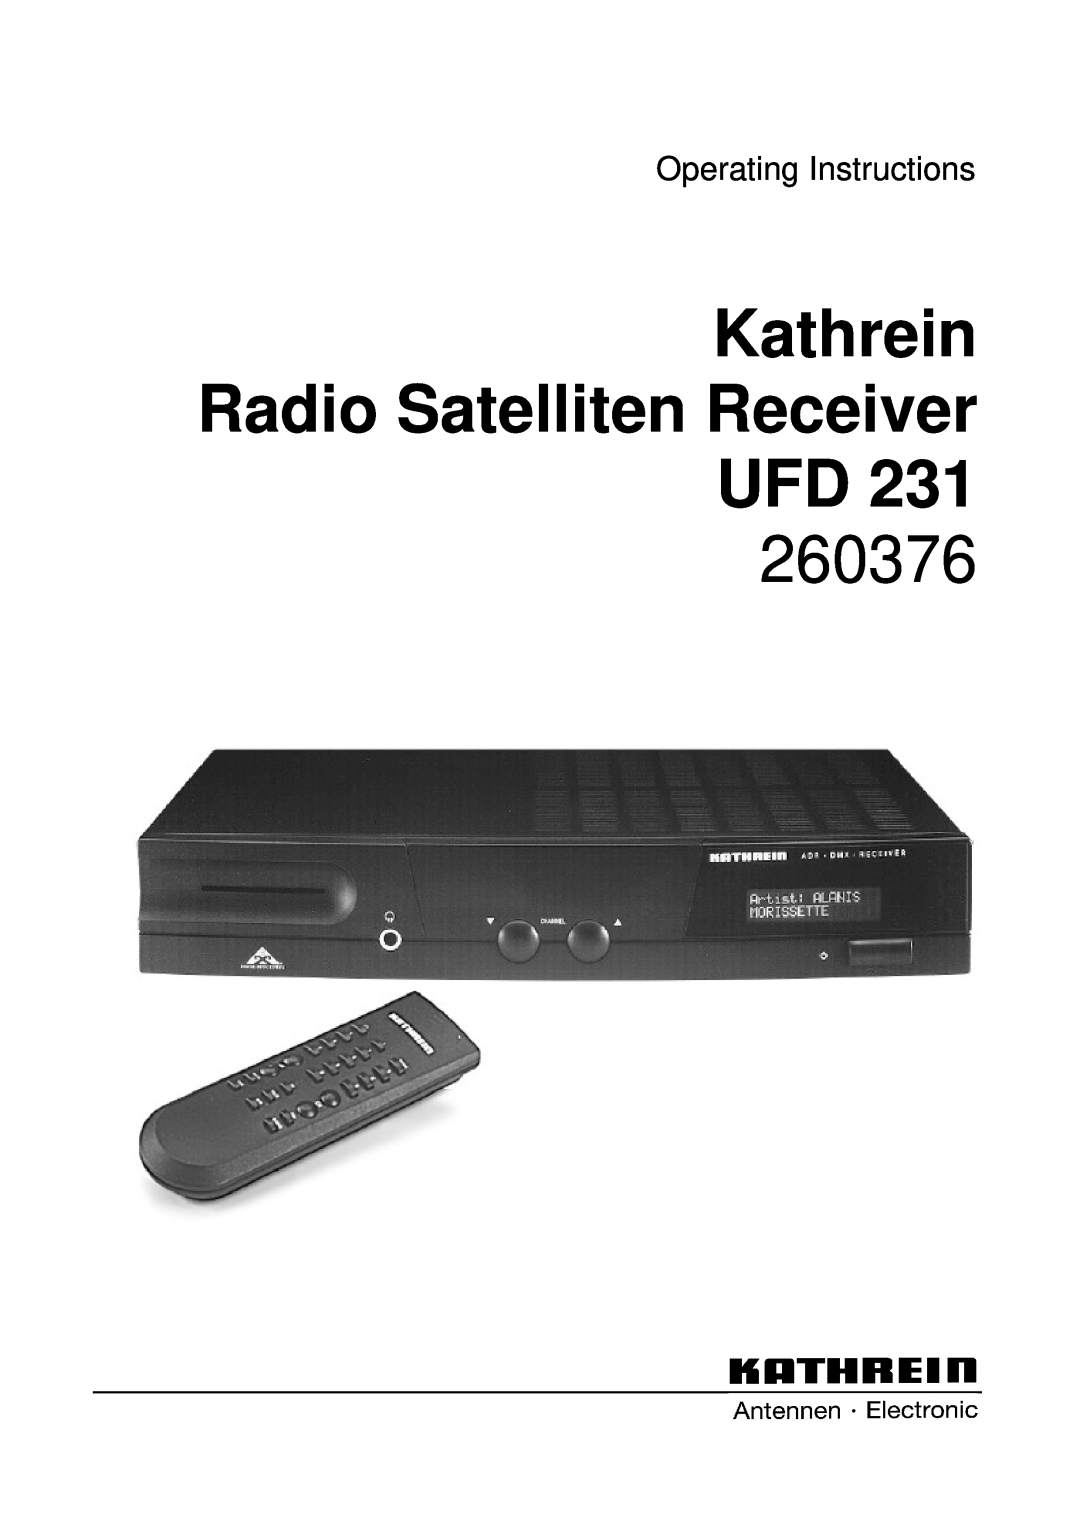 Kathrein 260376, UFD 231 operating instructions Kathrein Radio Satelliten Receiver UFD, Operating Instructions 